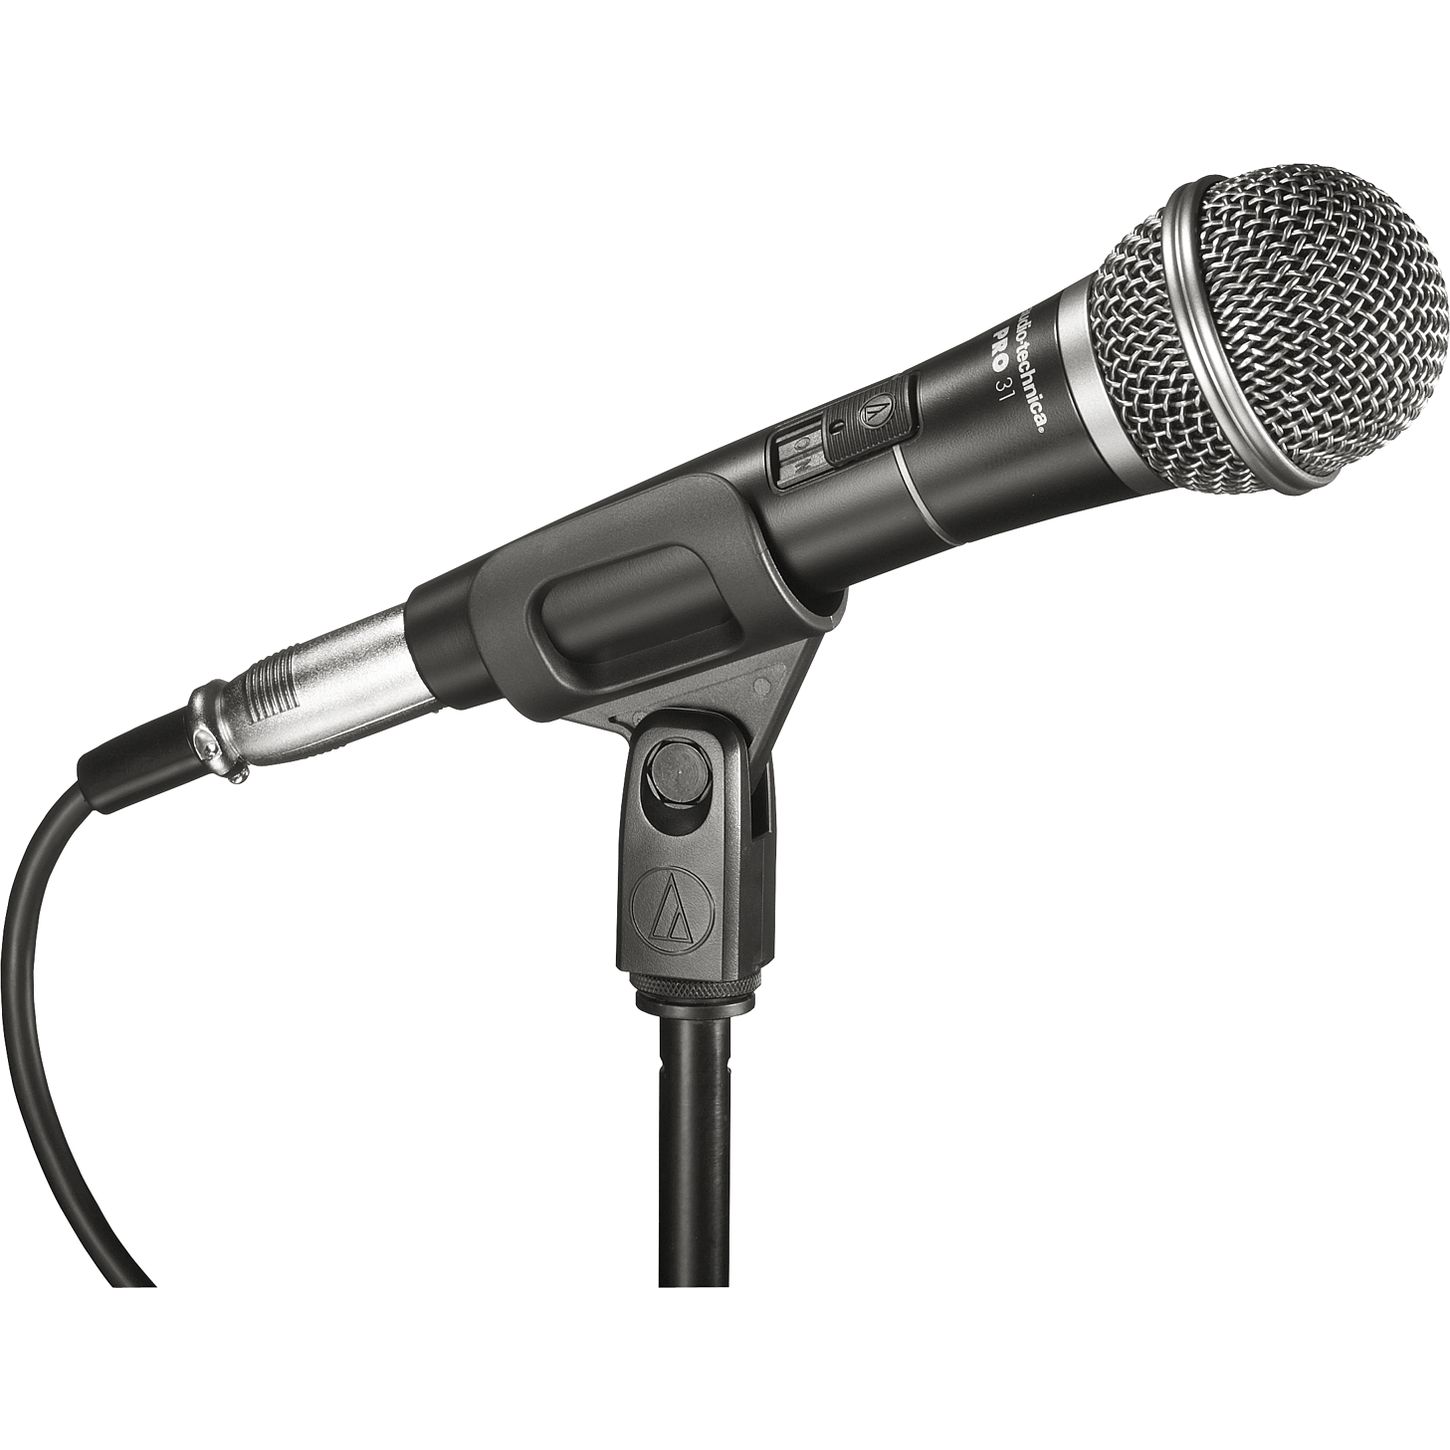 Microphone #21